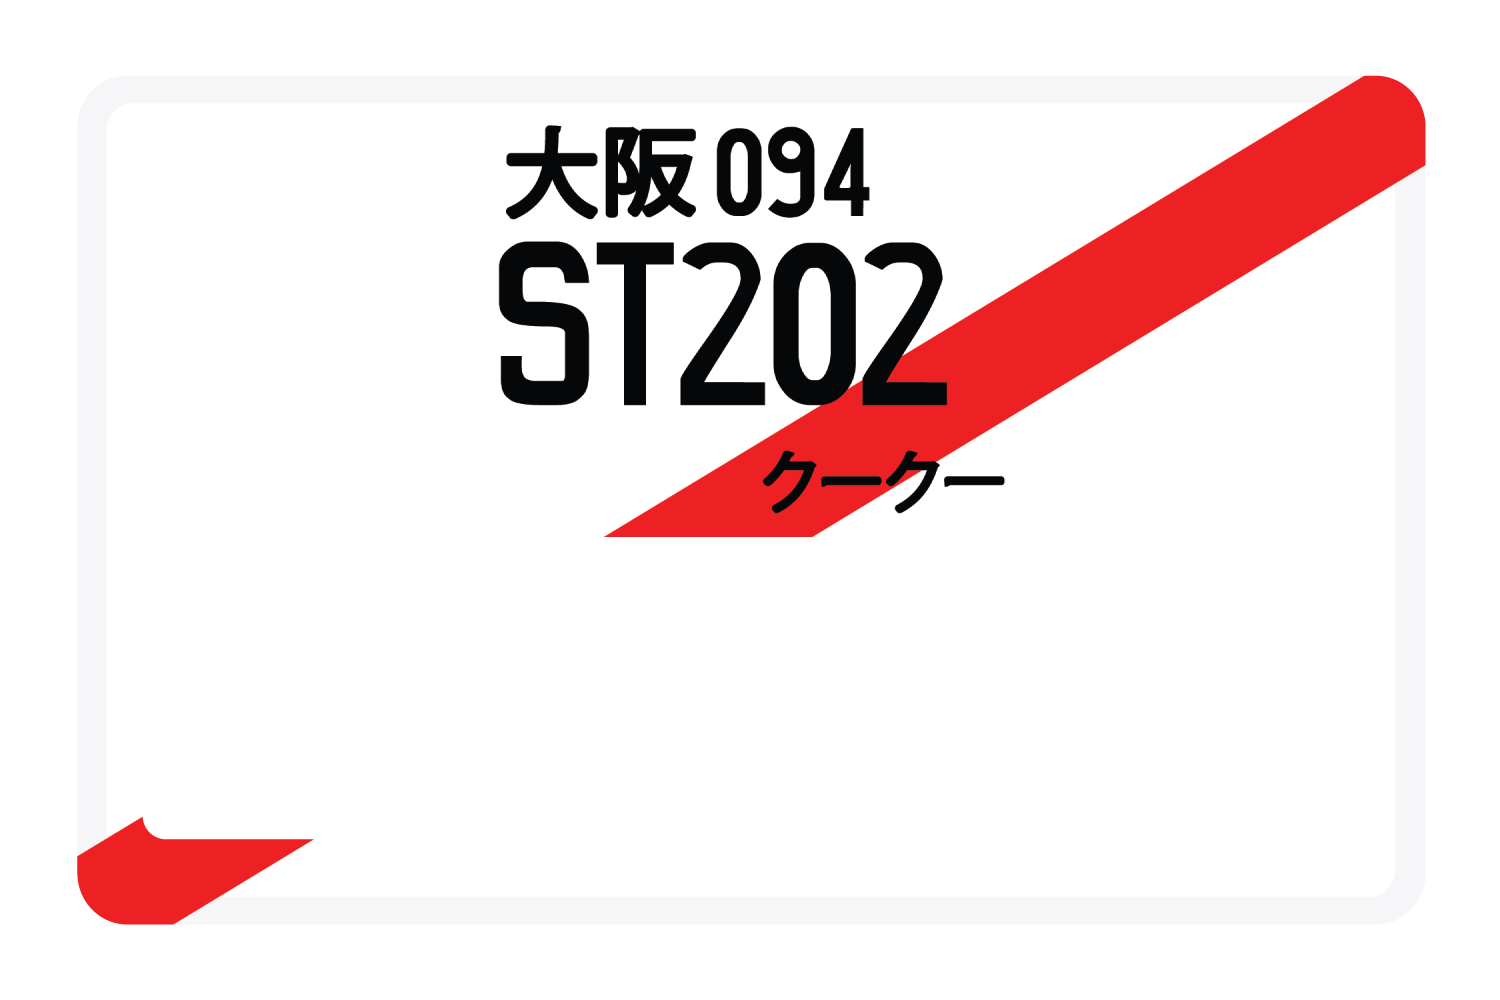 ST202